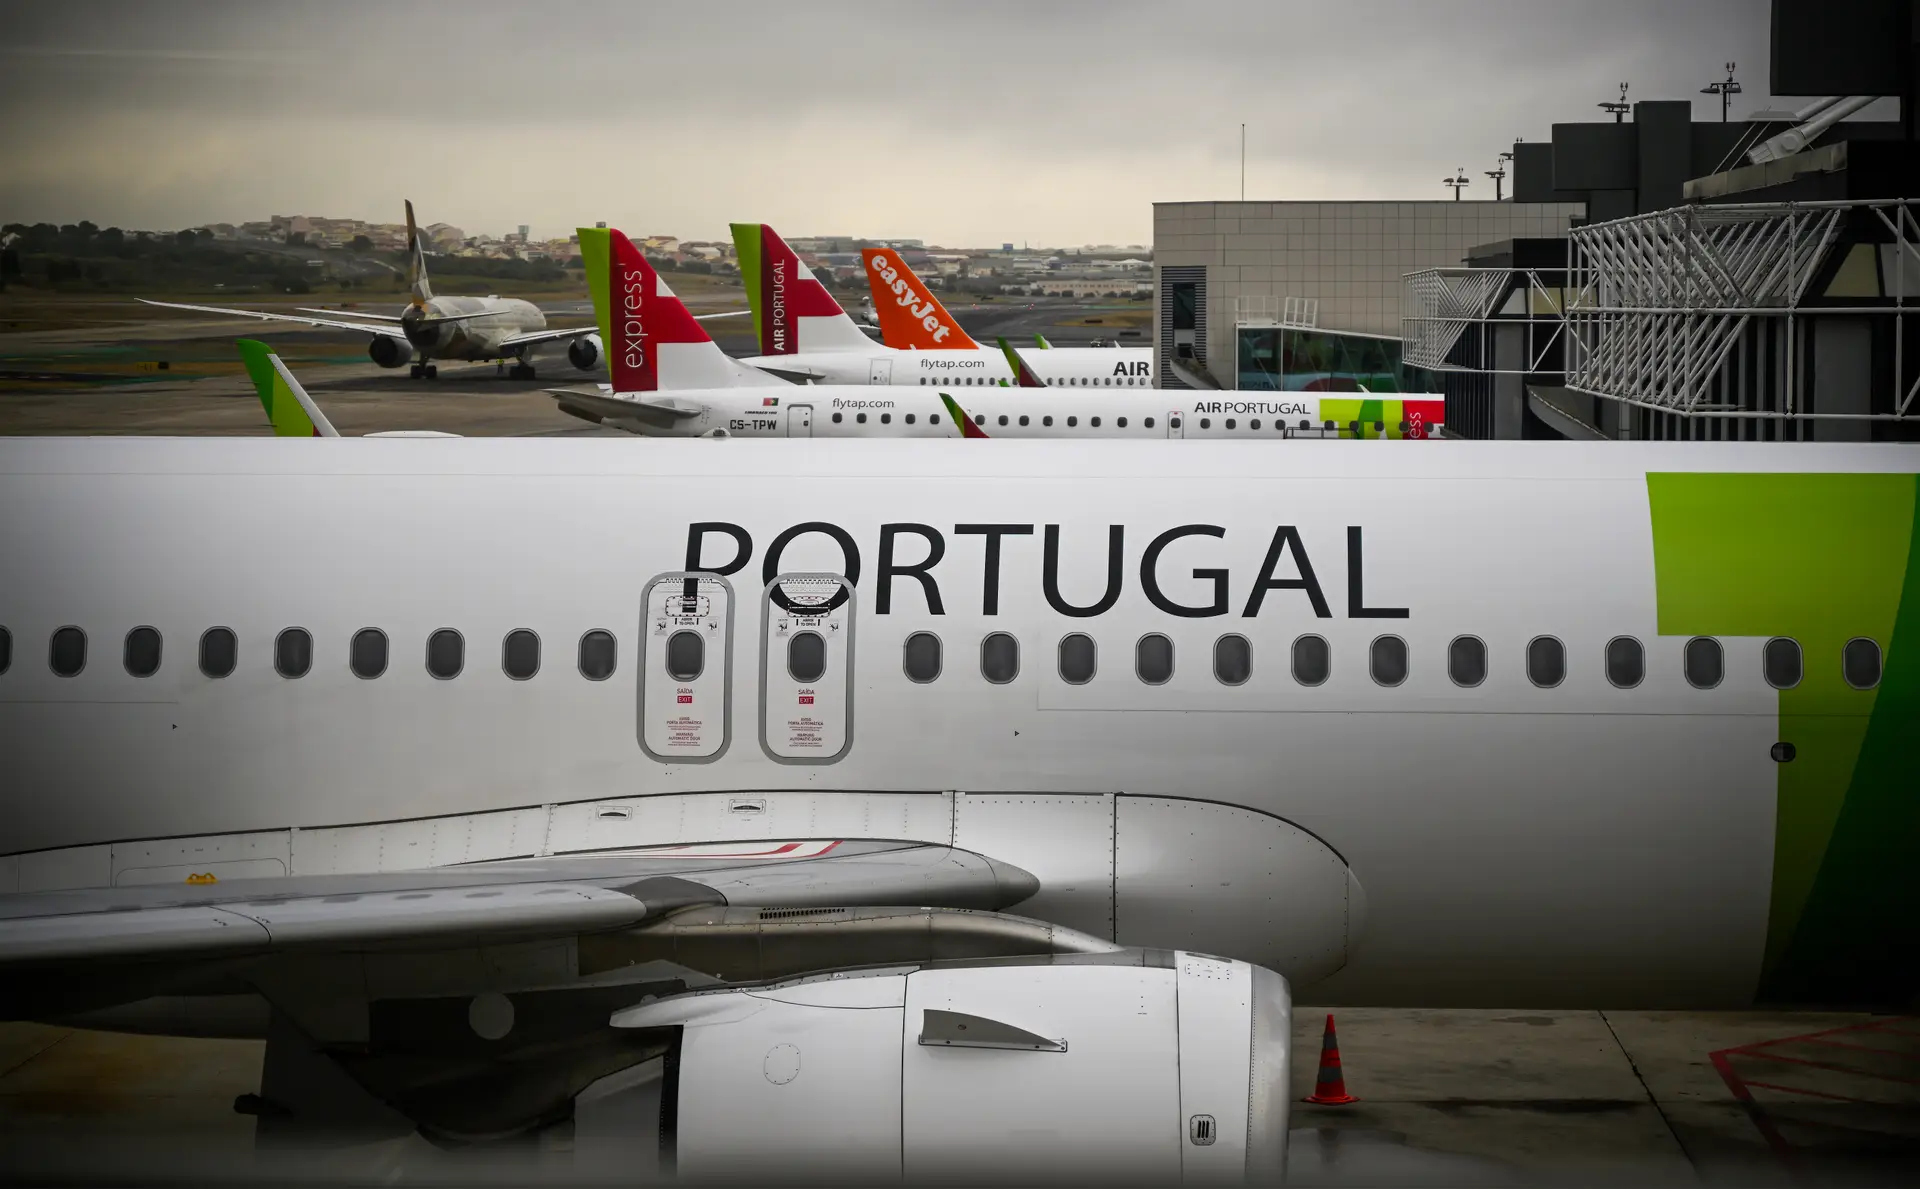 Vento forte causa atrasos e desvio de voos no aeroporto de Lisboa